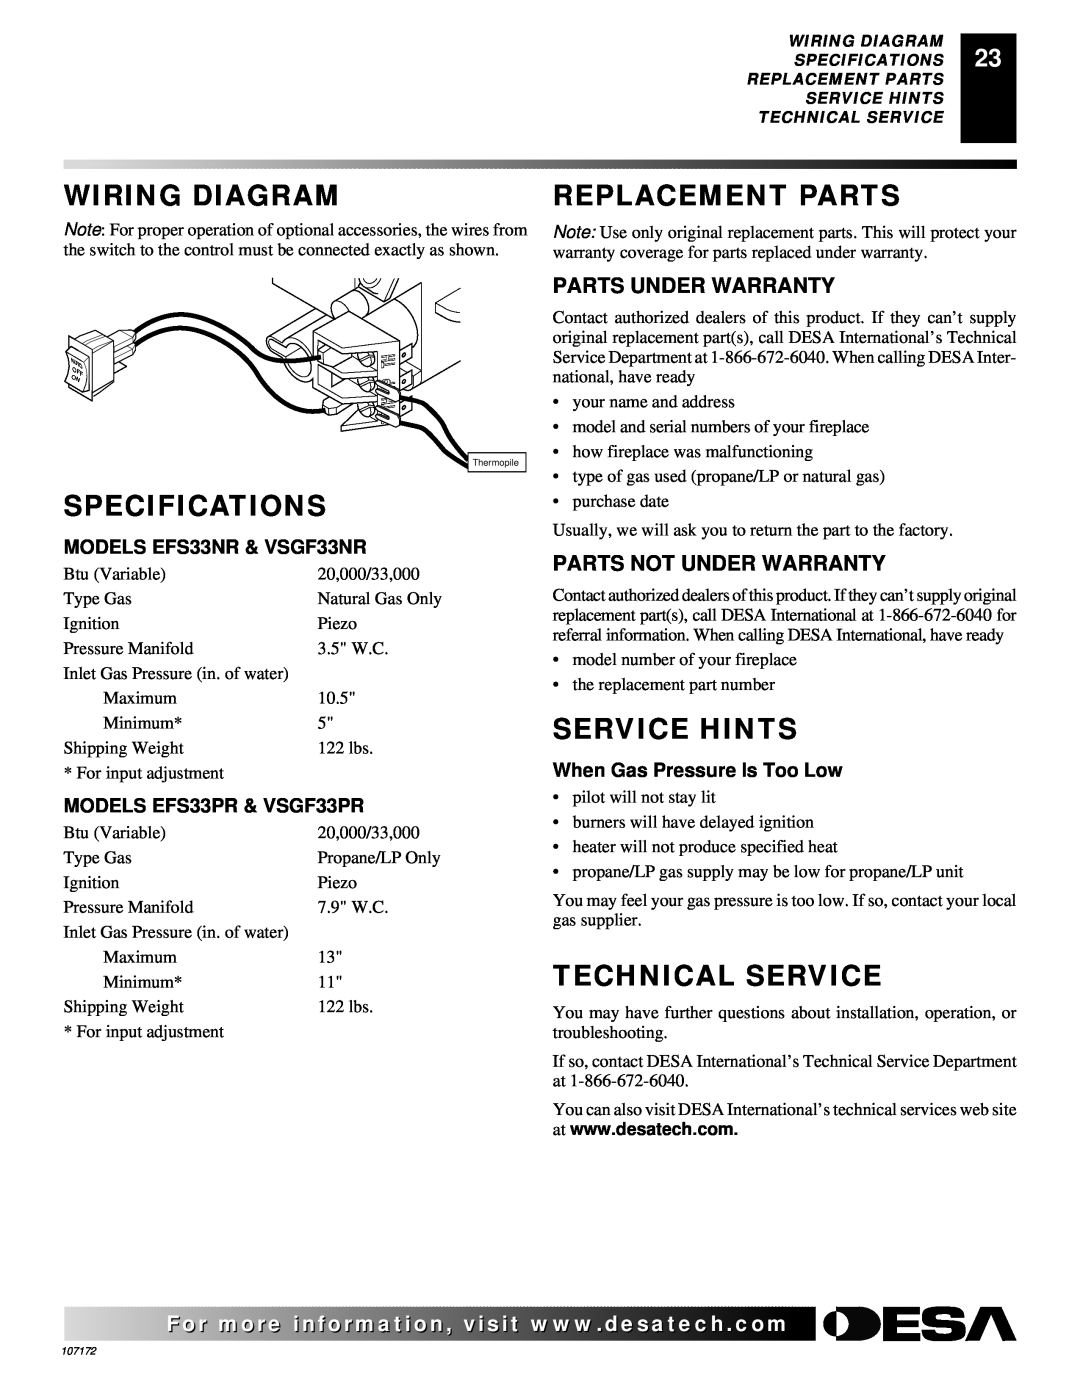 Desa VSGF33PR Wiring Diagram, Specifications, Replacement Parts, Service Hints, Technical Service, Parts Under Warranty 